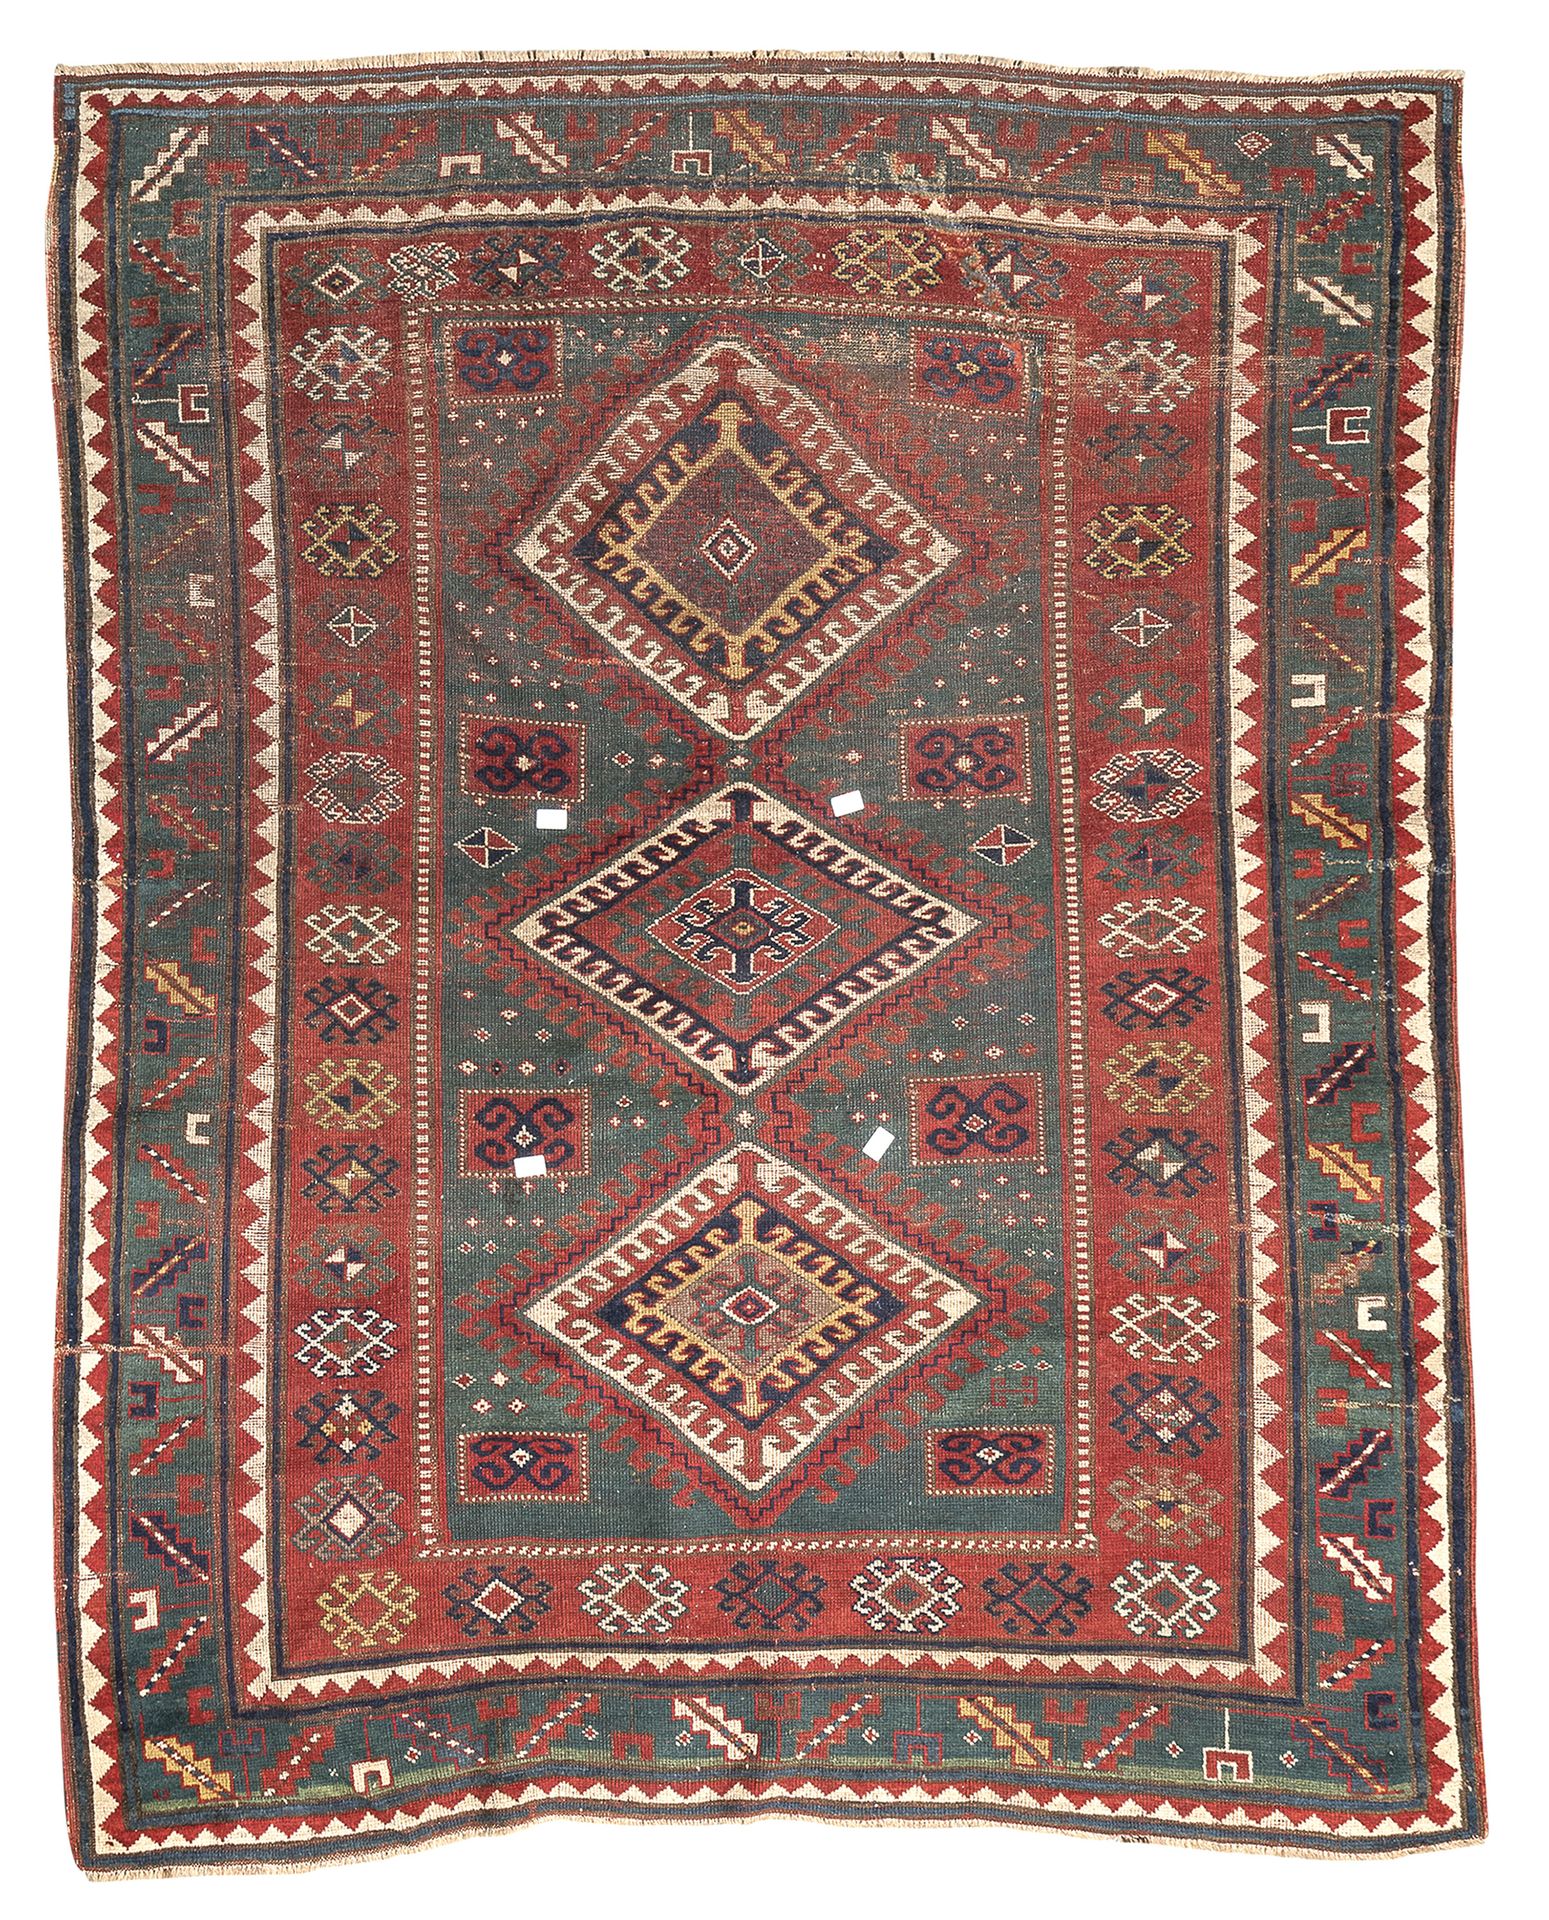 Null 卡扎克-波尔蒂亚鲁地毯，19世纪末


在绿色背景上，中央区域有一个带爪子和次要的矩形、菱形和符号的三重菱形奖章。边缘有橡树叶。


尺寸为200 x&hellip;